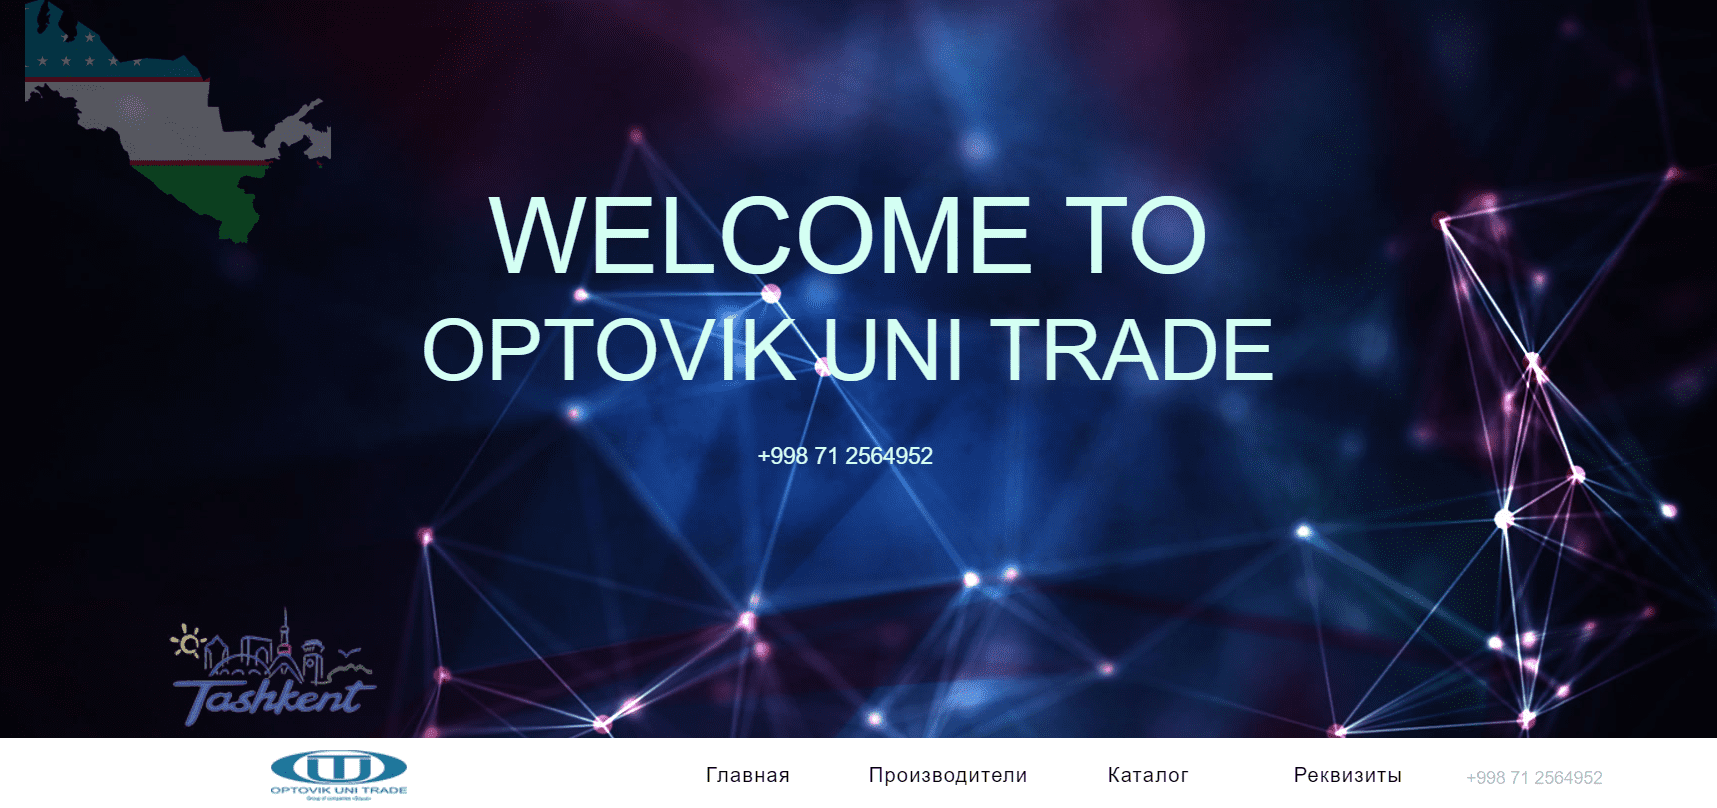 Optovik Uni Trade (soyuz.uz) - официальный сайт